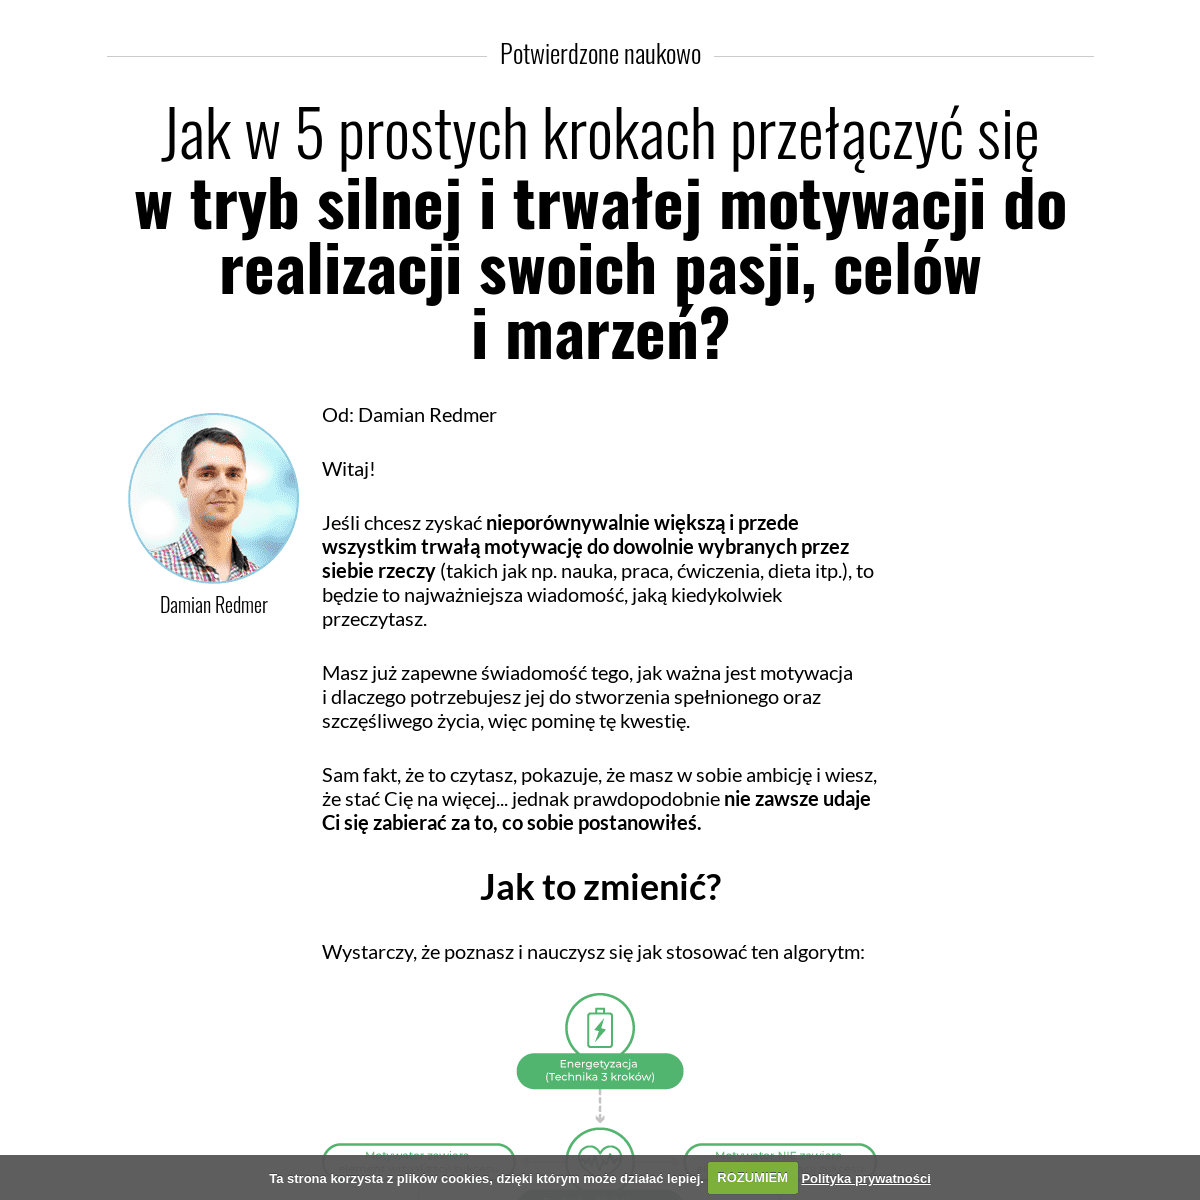 A complete backup of trwalamotywacja.pl